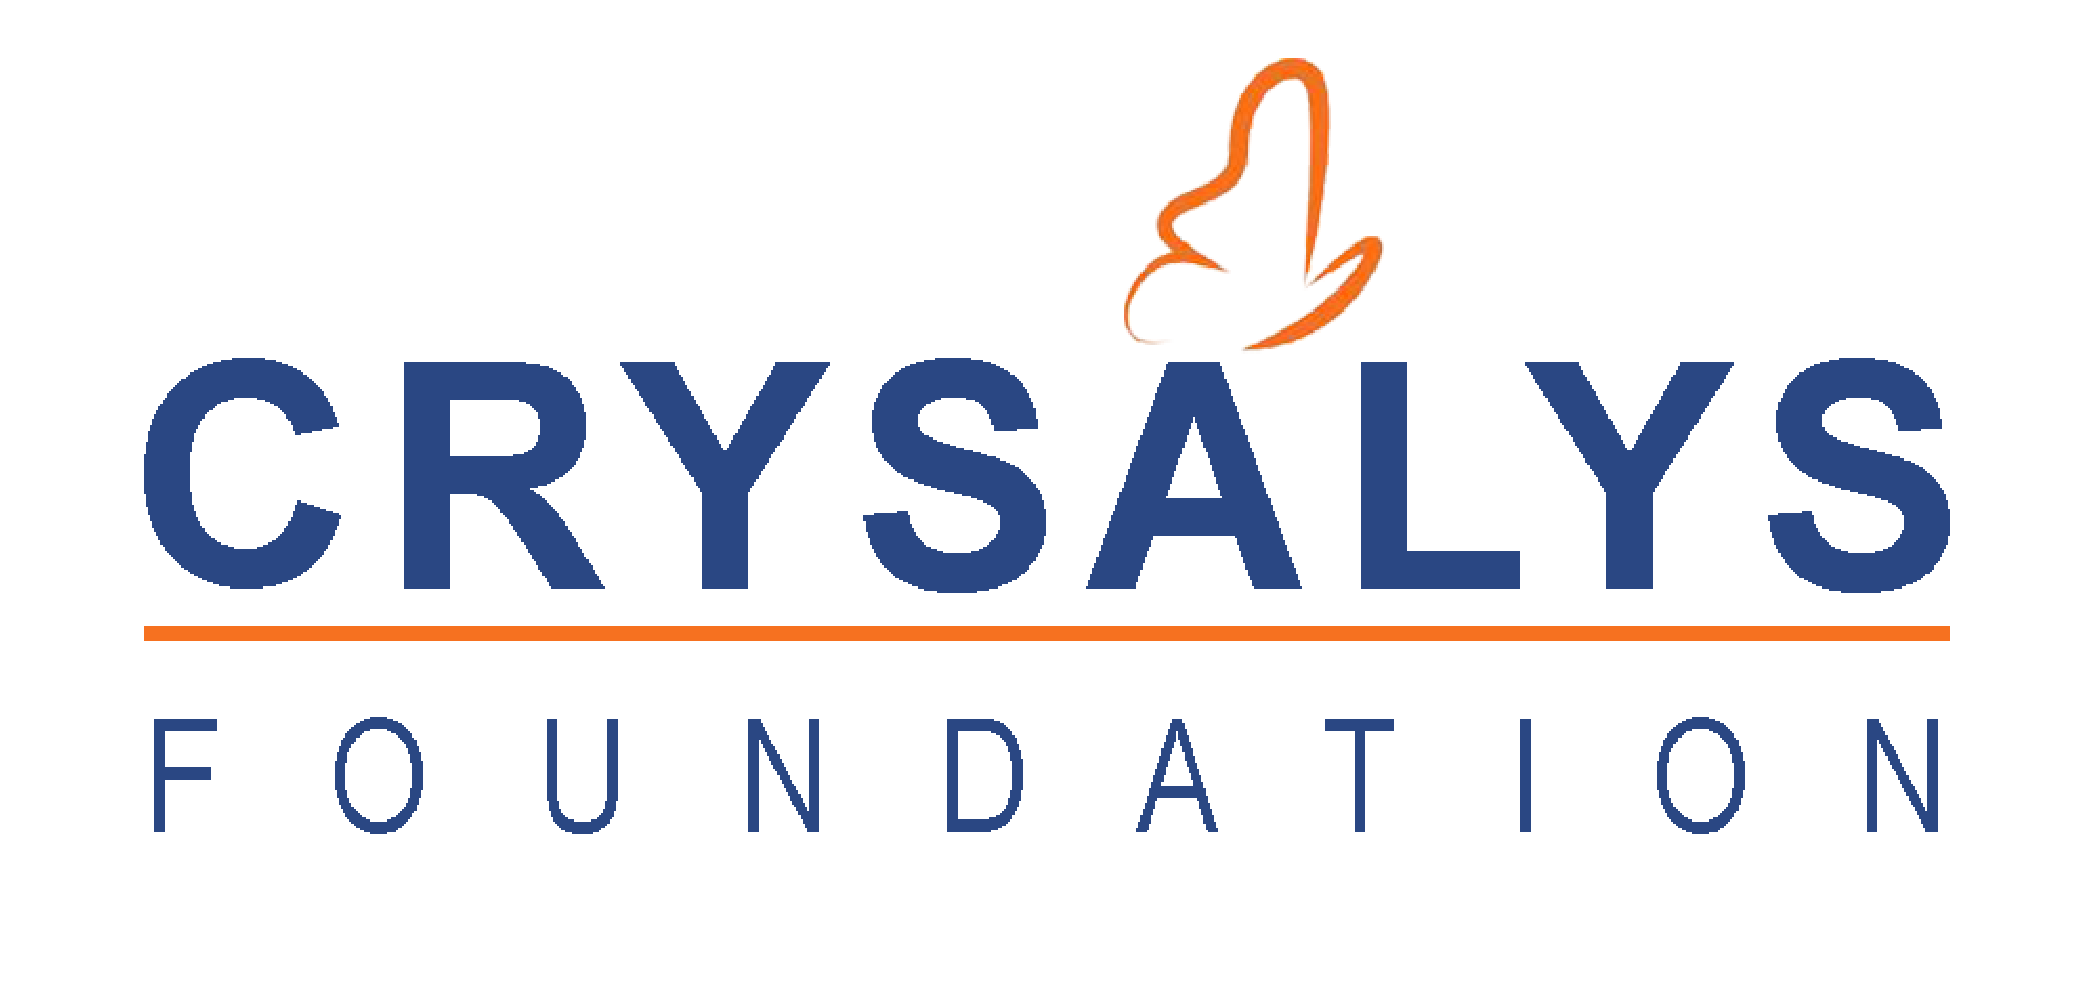 The Crysalys Foundation